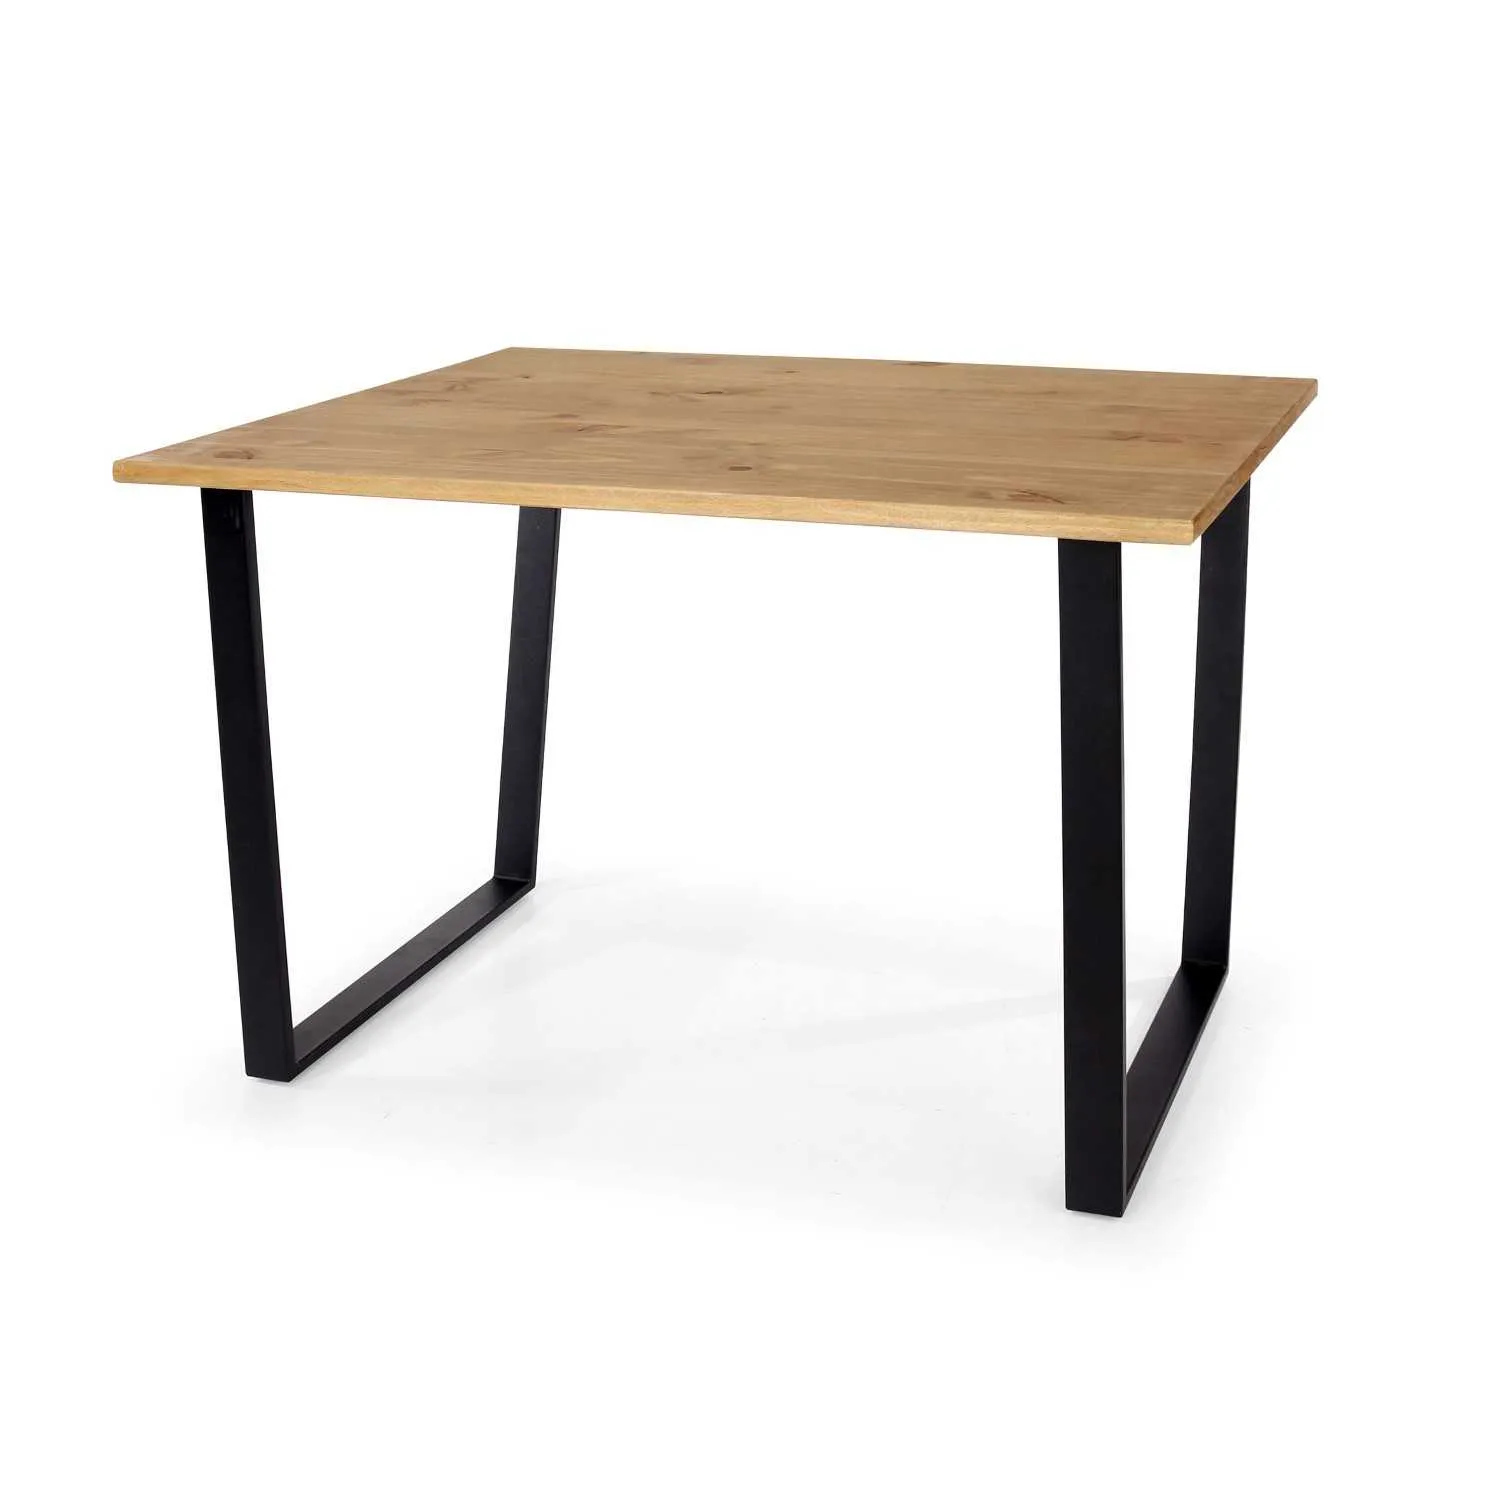 Waxed Wooden Top Rectangular Dining Table Black Metal Legs 118 x 75cm